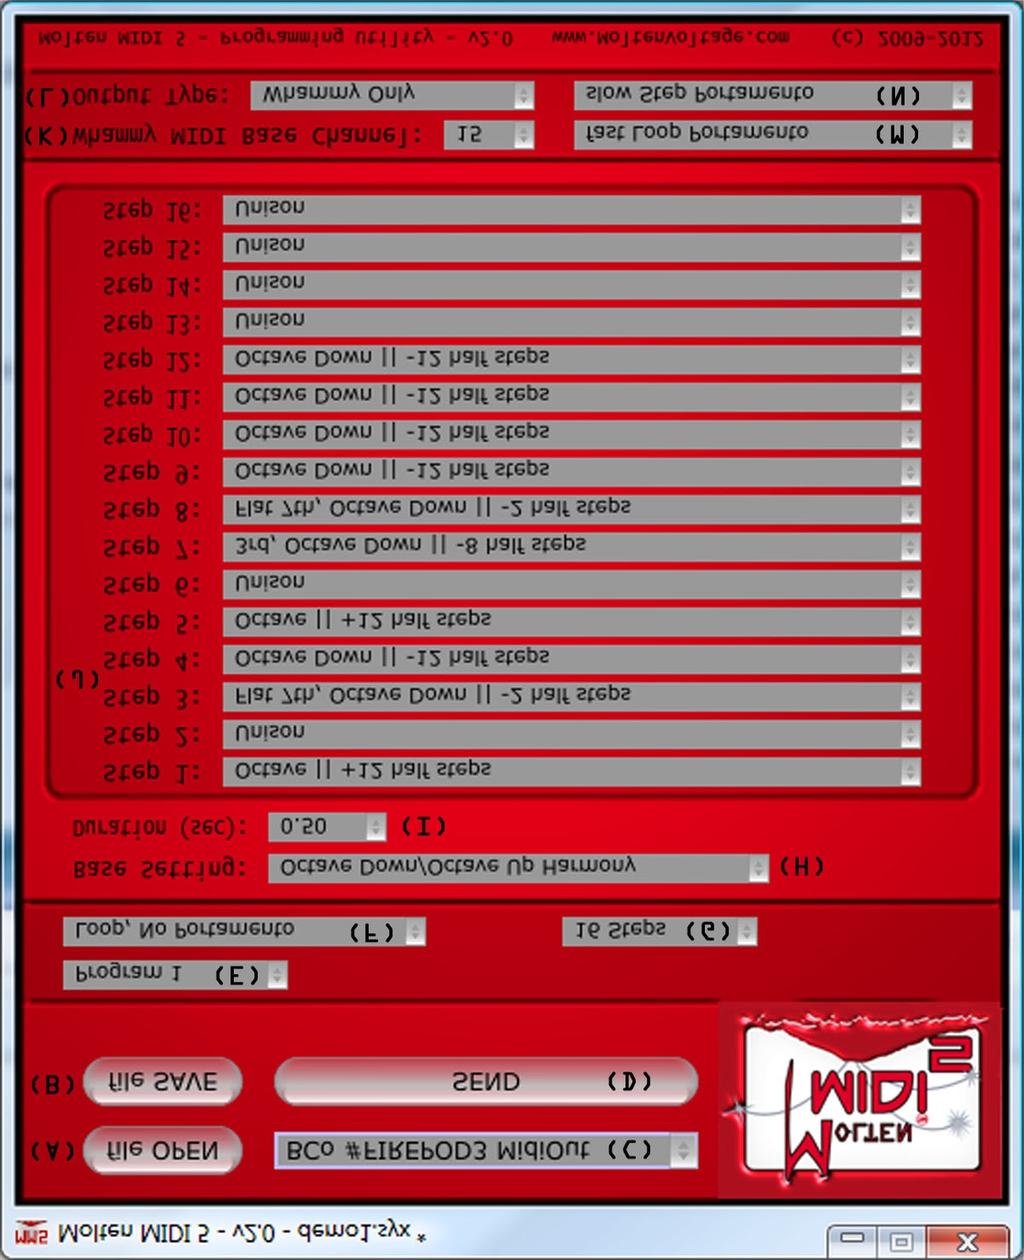 The Molten MIDI 5 Programming Utility looks like this: 4) Plug the computer s MIDI OUT into Molten MIDI 5.